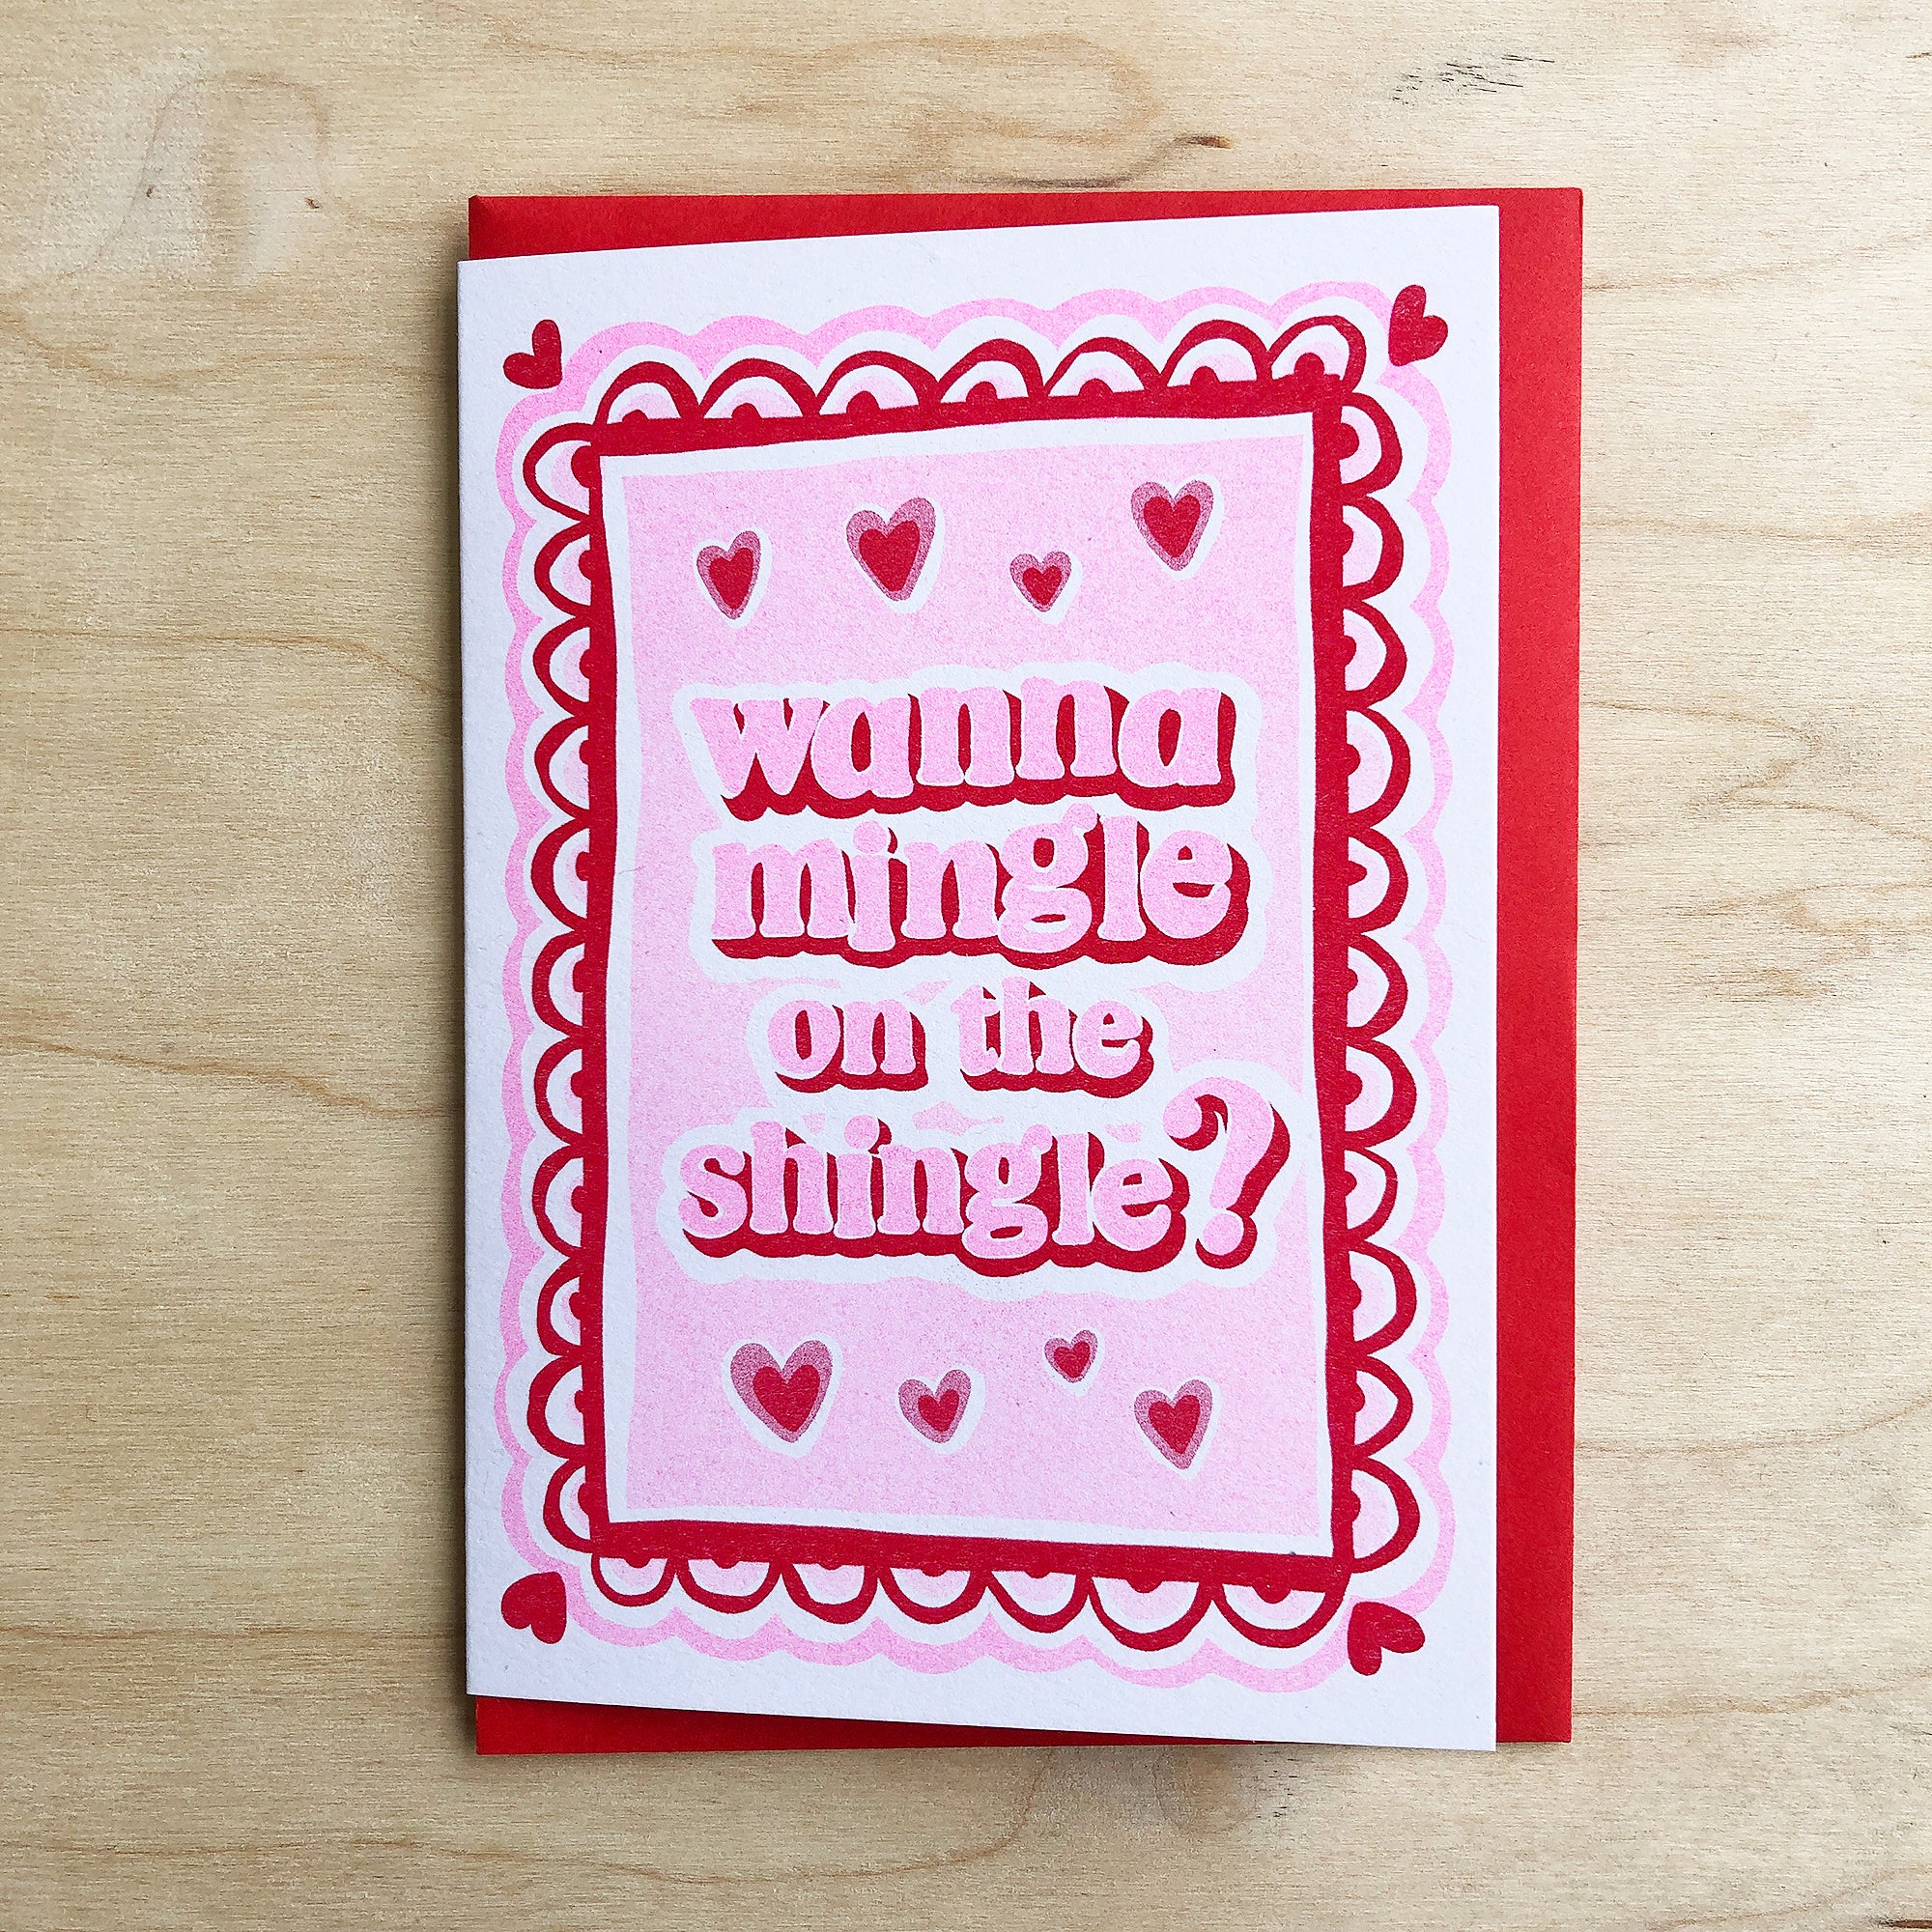 Mingle on the Shingle riso greeting card